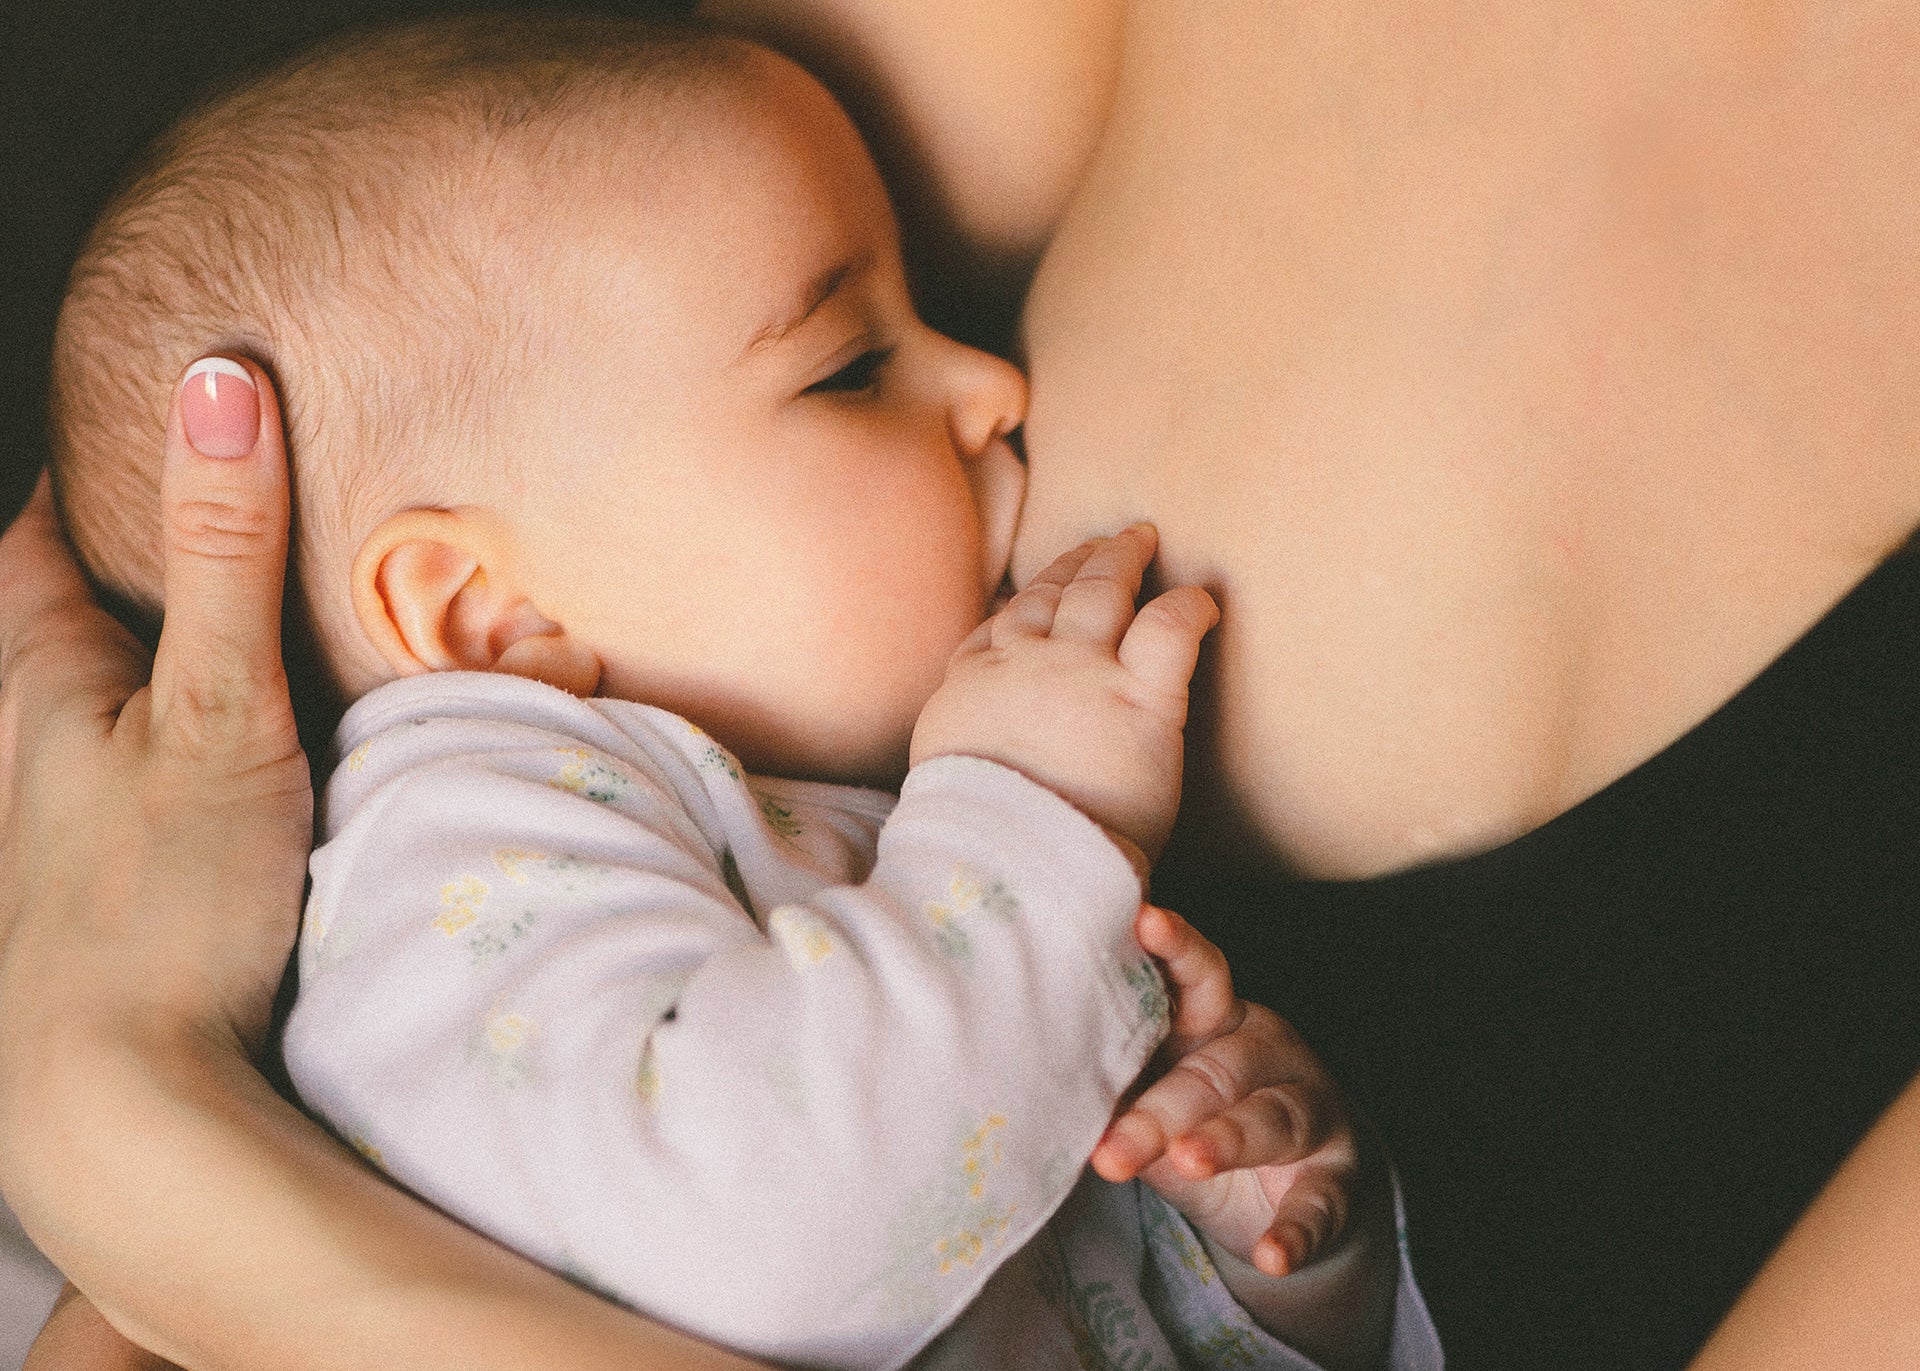 10-Month-Old Baby: Milestones, Sleep, and Feeding